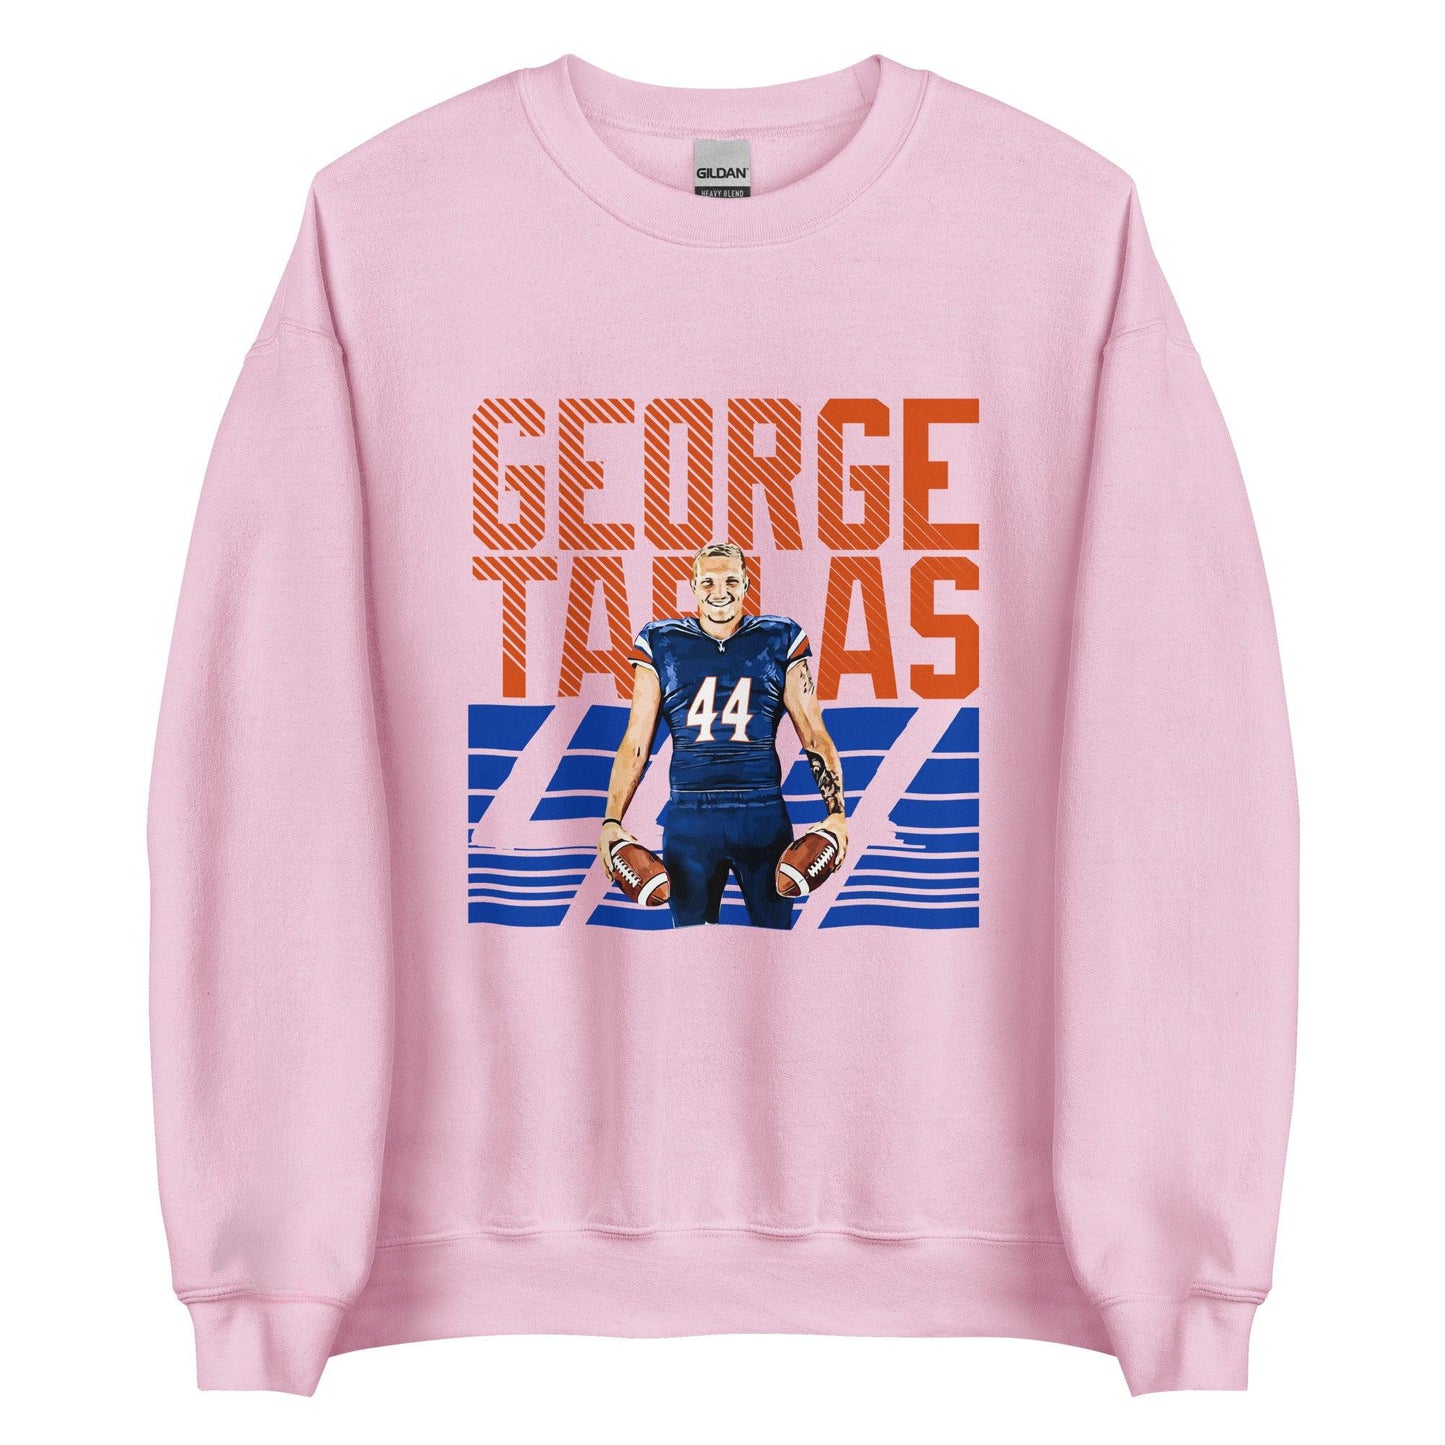 George Tarlas "Gameday" Sweatshirt - Fan Arch